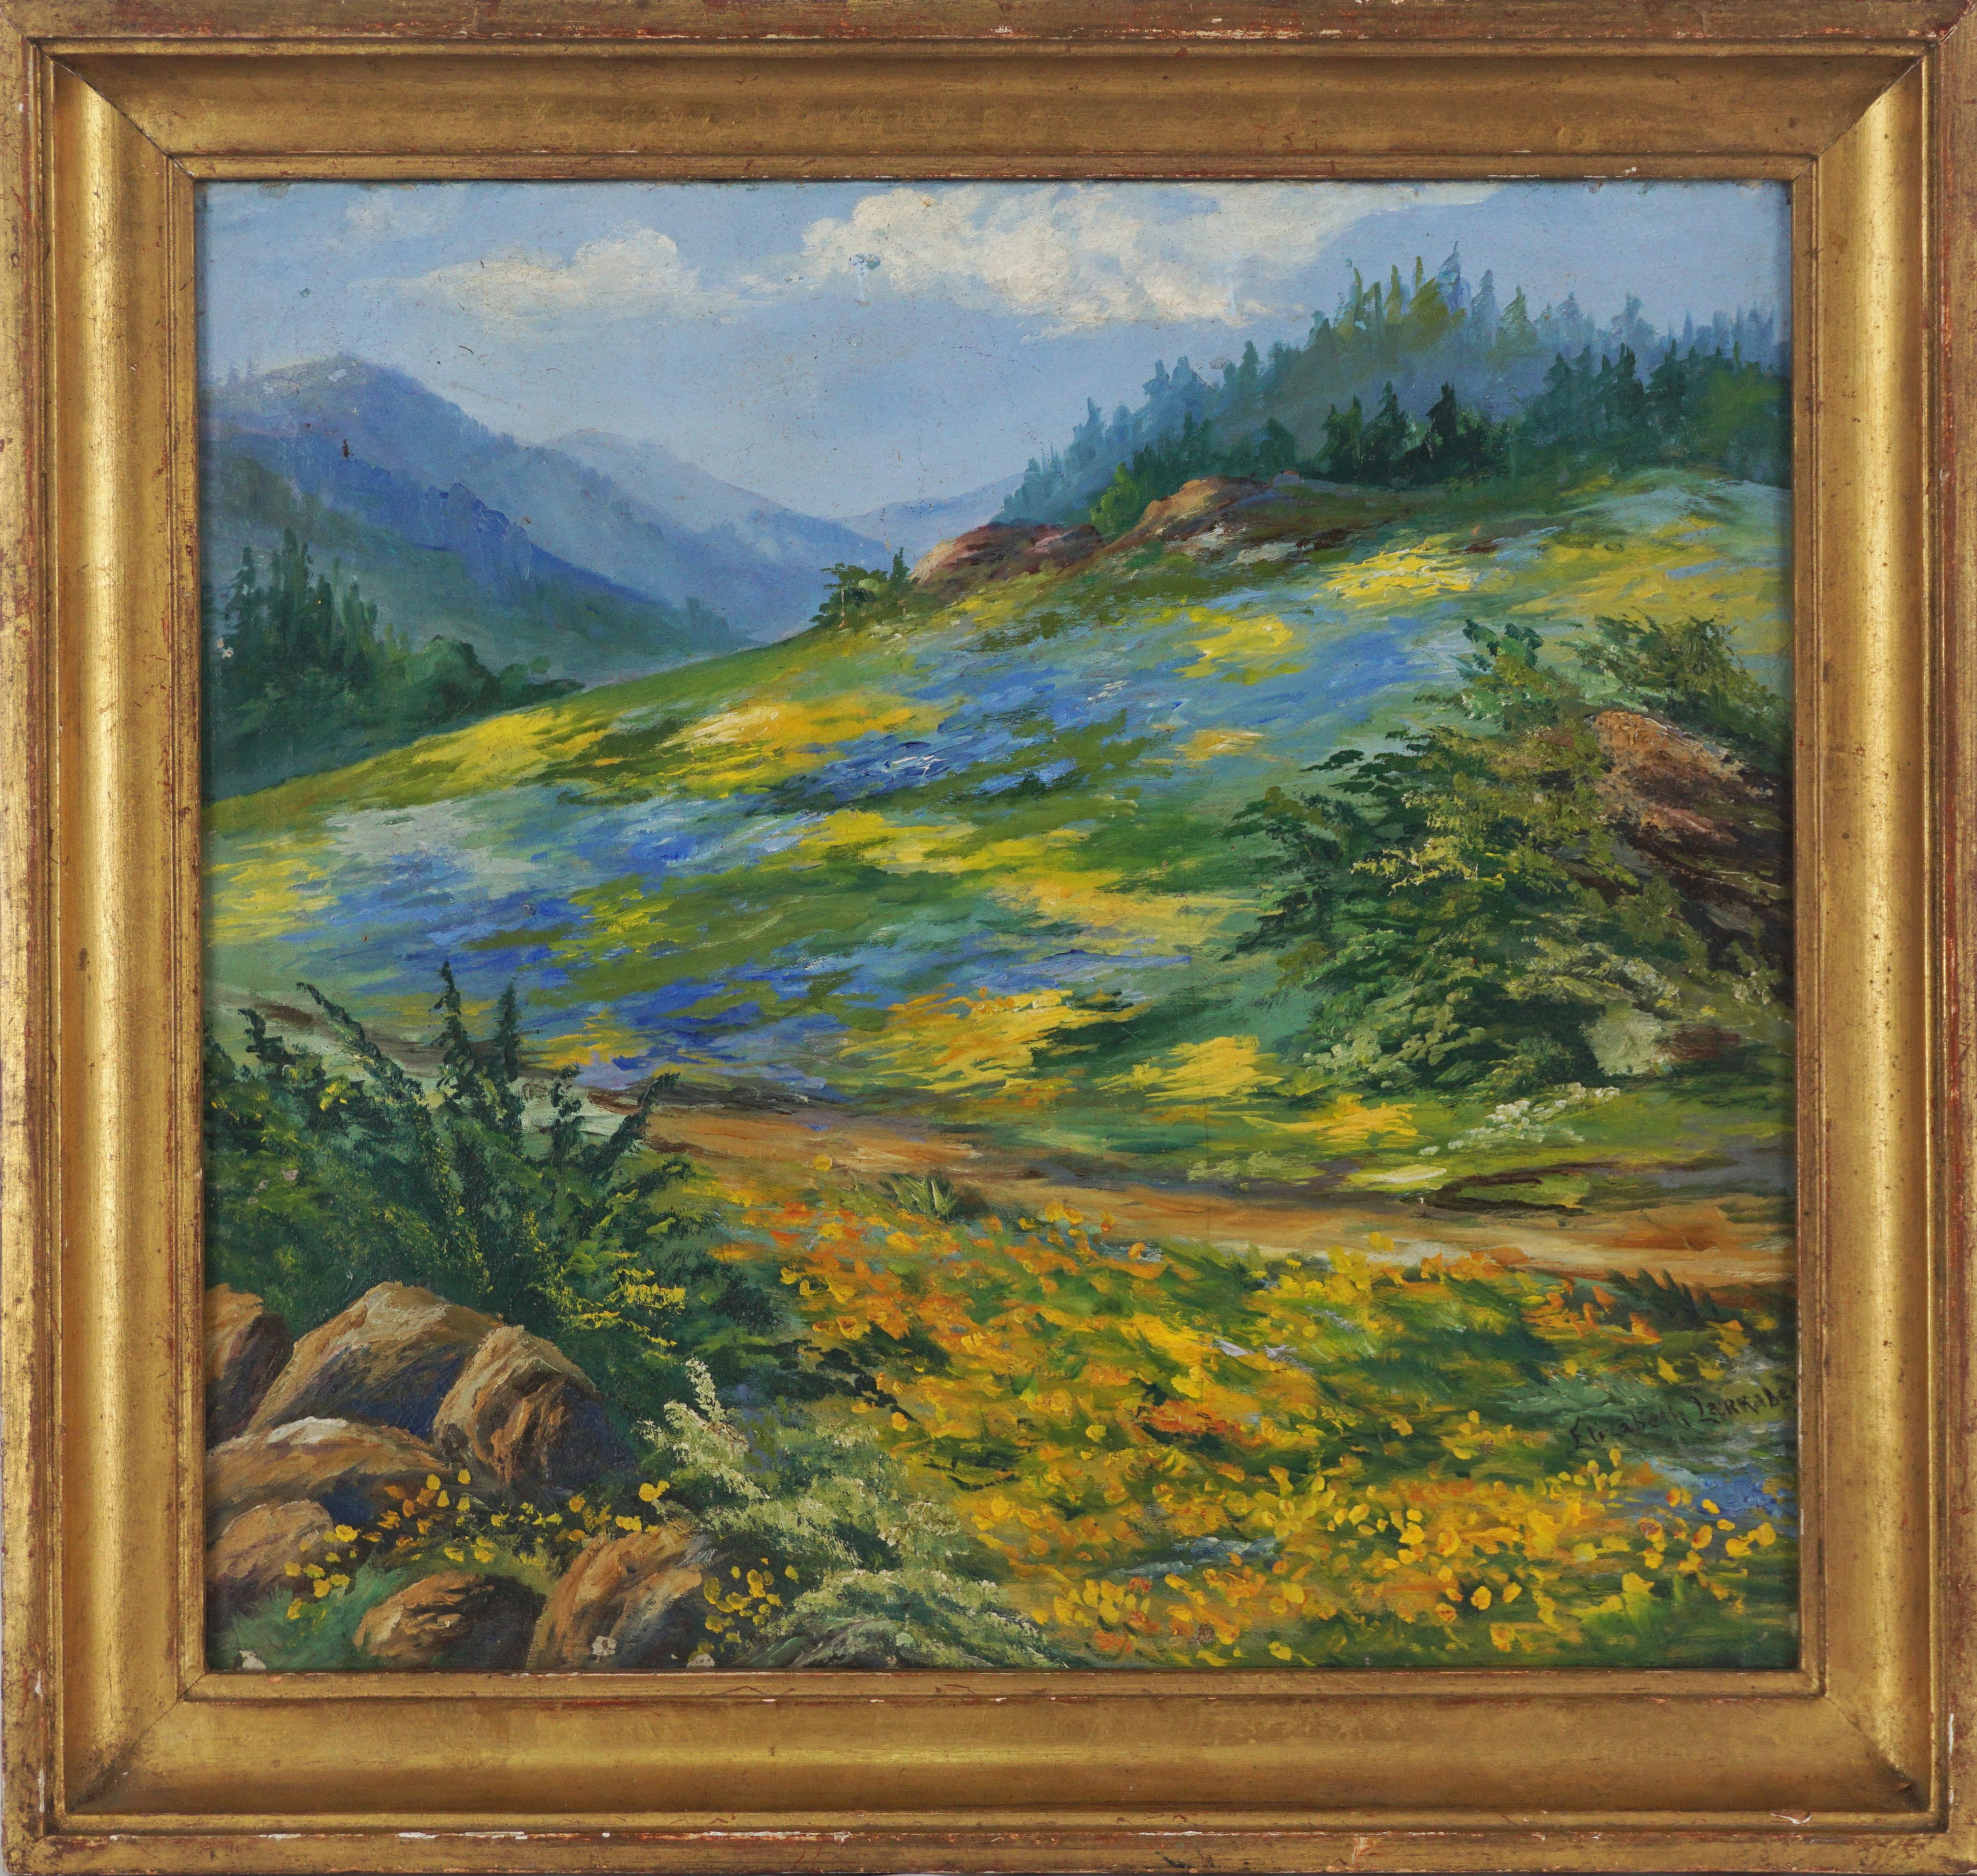 Elizabeth Larrabee Landscape Painting - Through The Spring Fields, Early 20th Century Landscape w Wildflowers in Bloom 